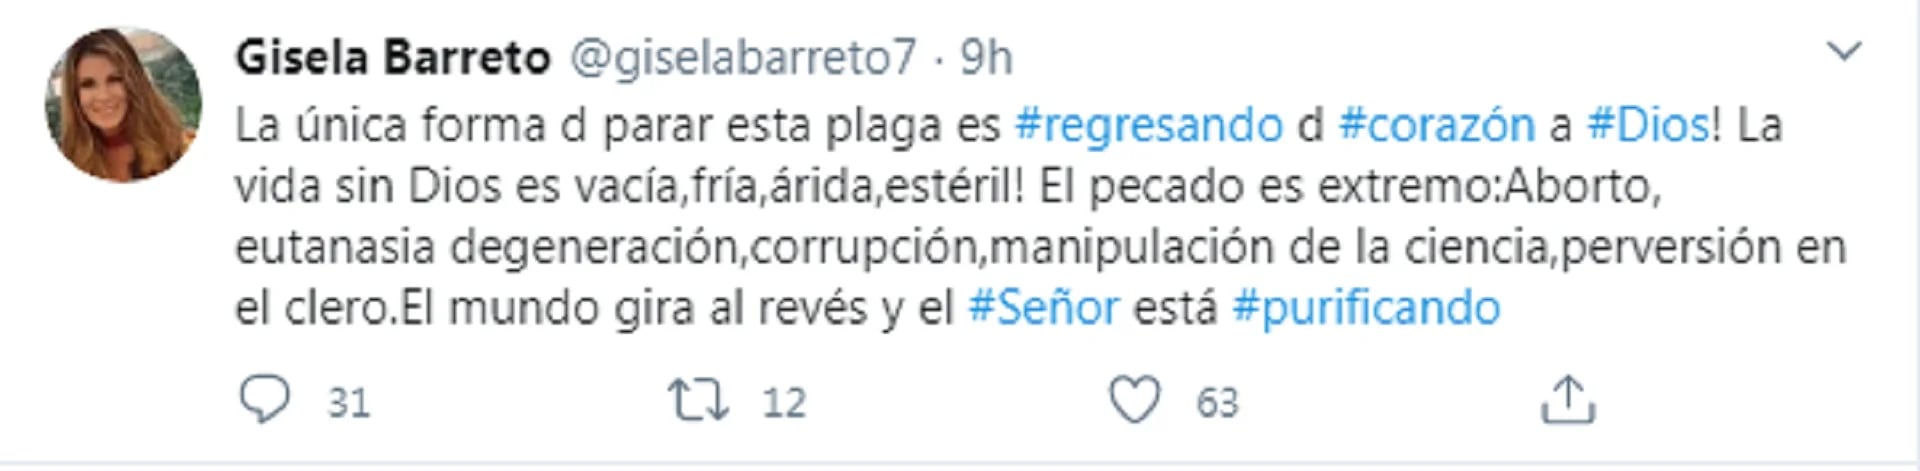 El tuit de Gisela Barreto